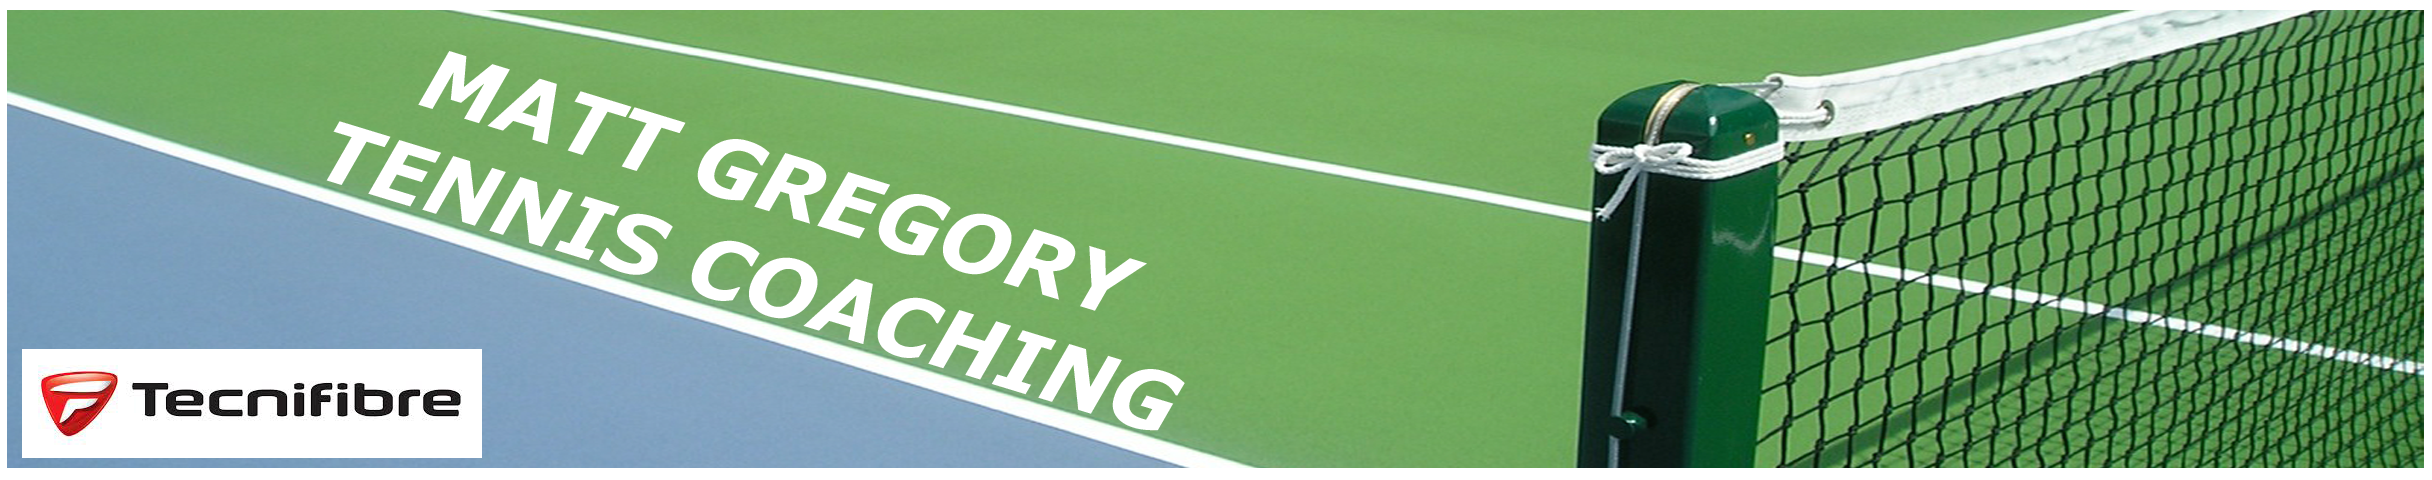 matt gregory tennis